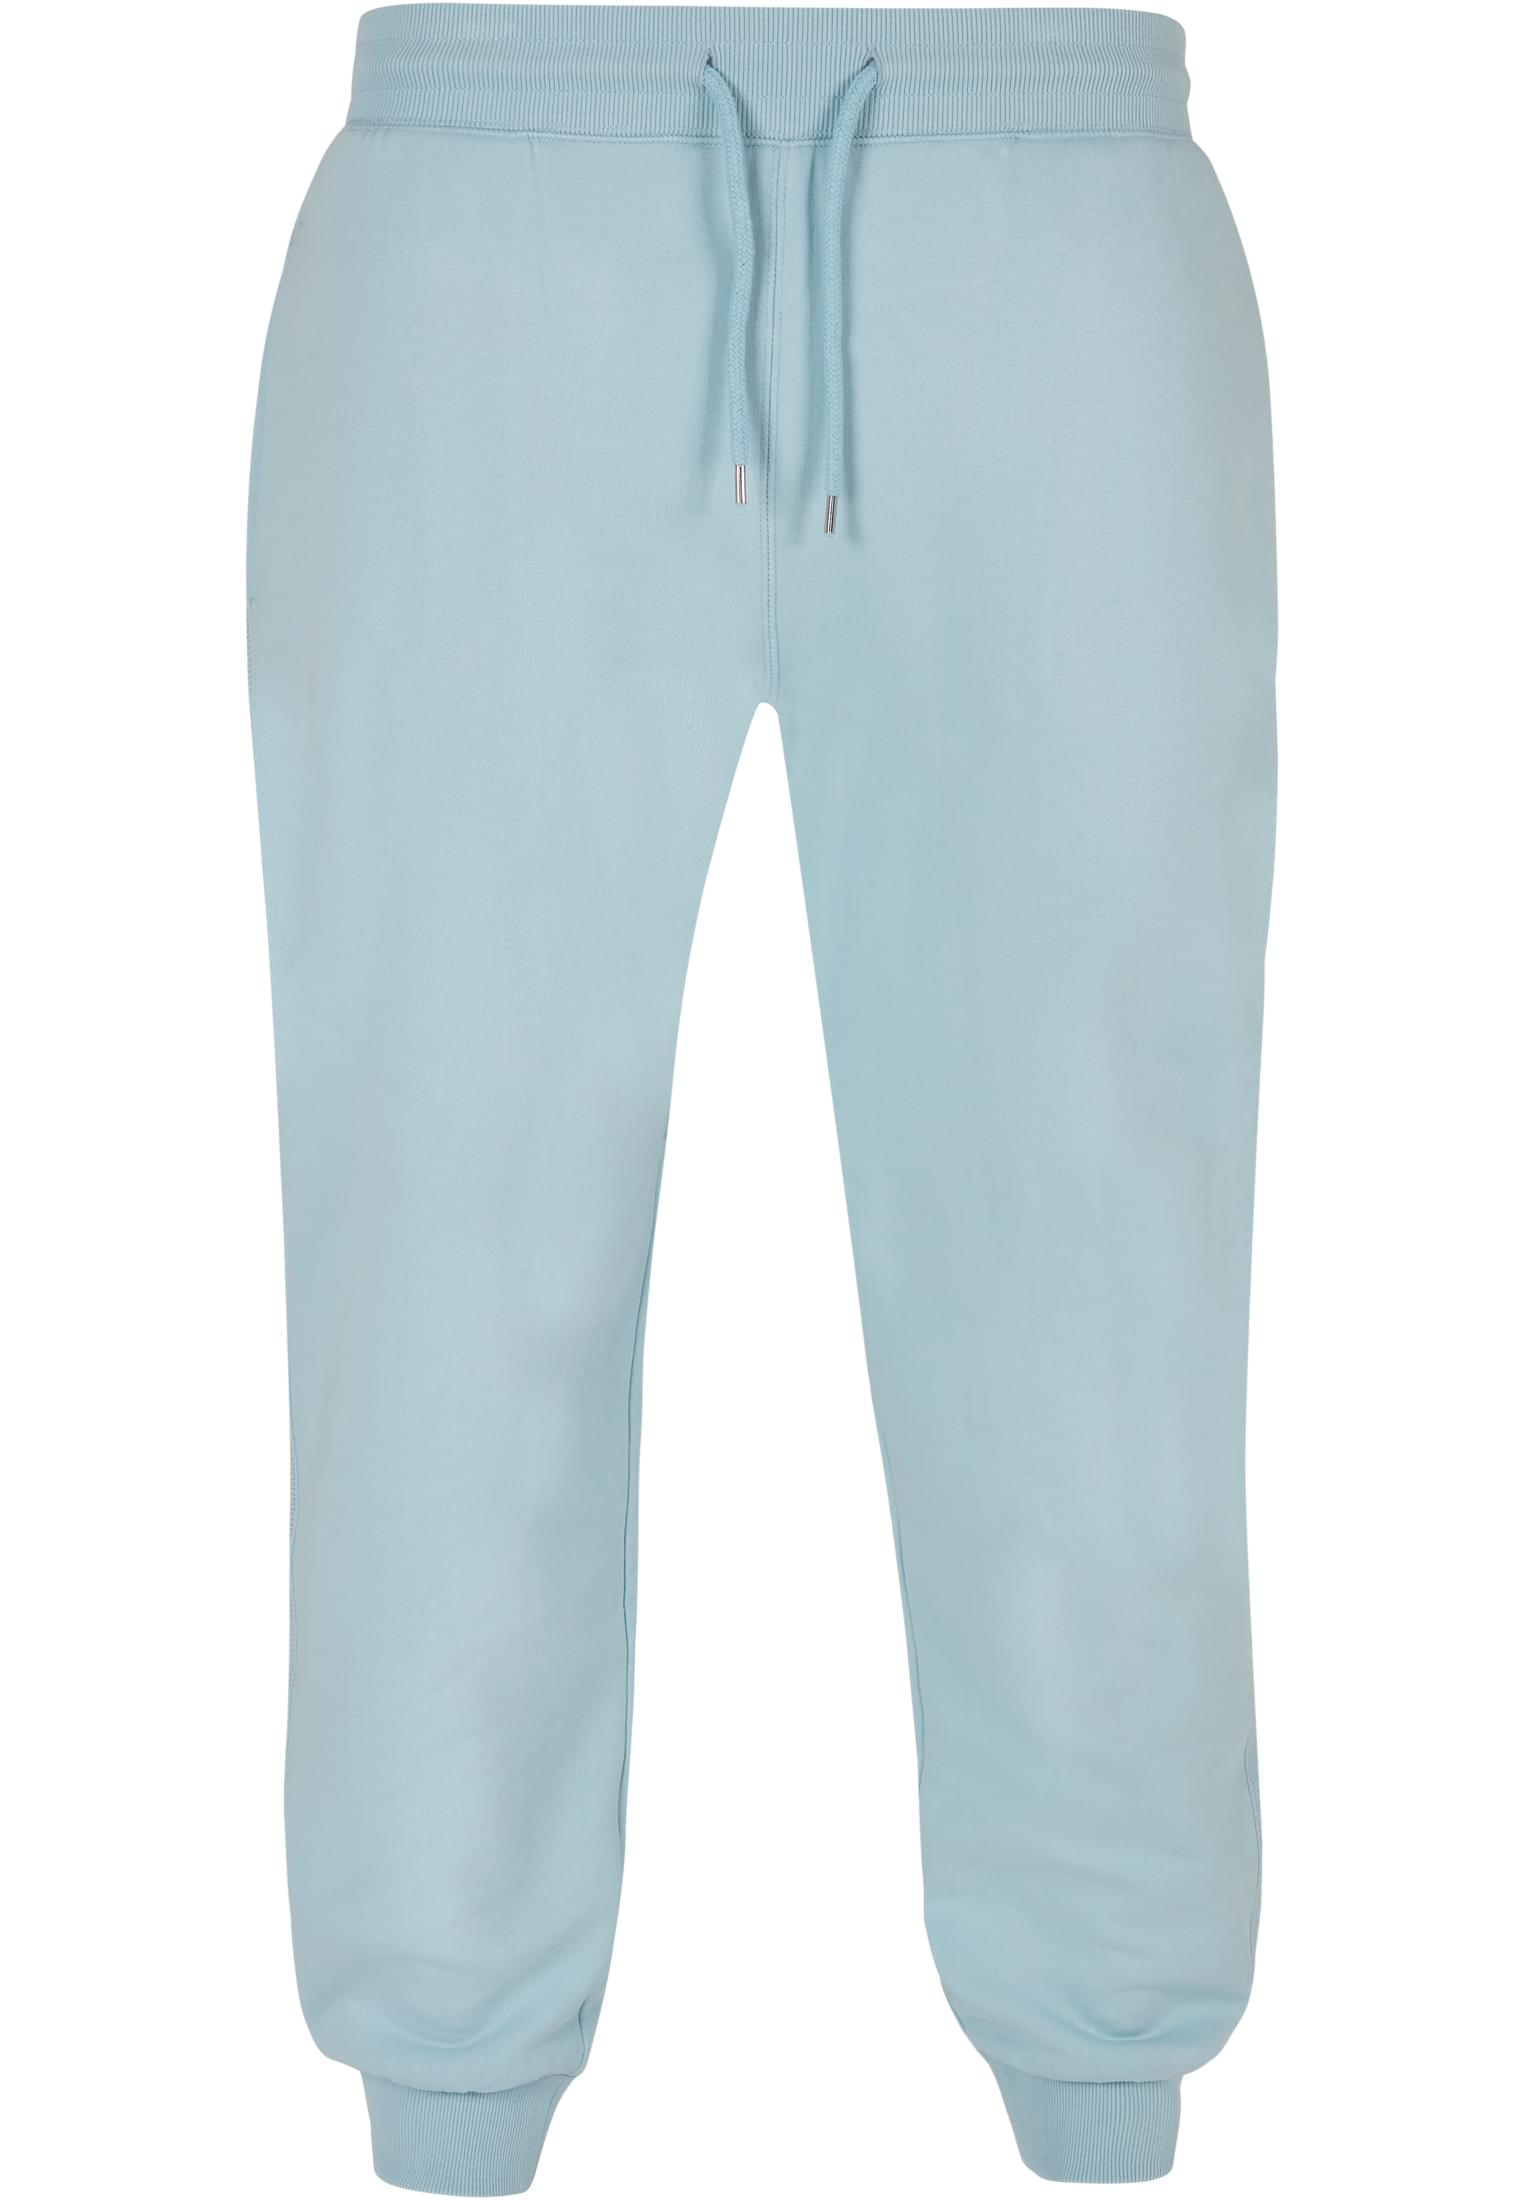 Herren Basic Sweatpants in Farbe ocean blue